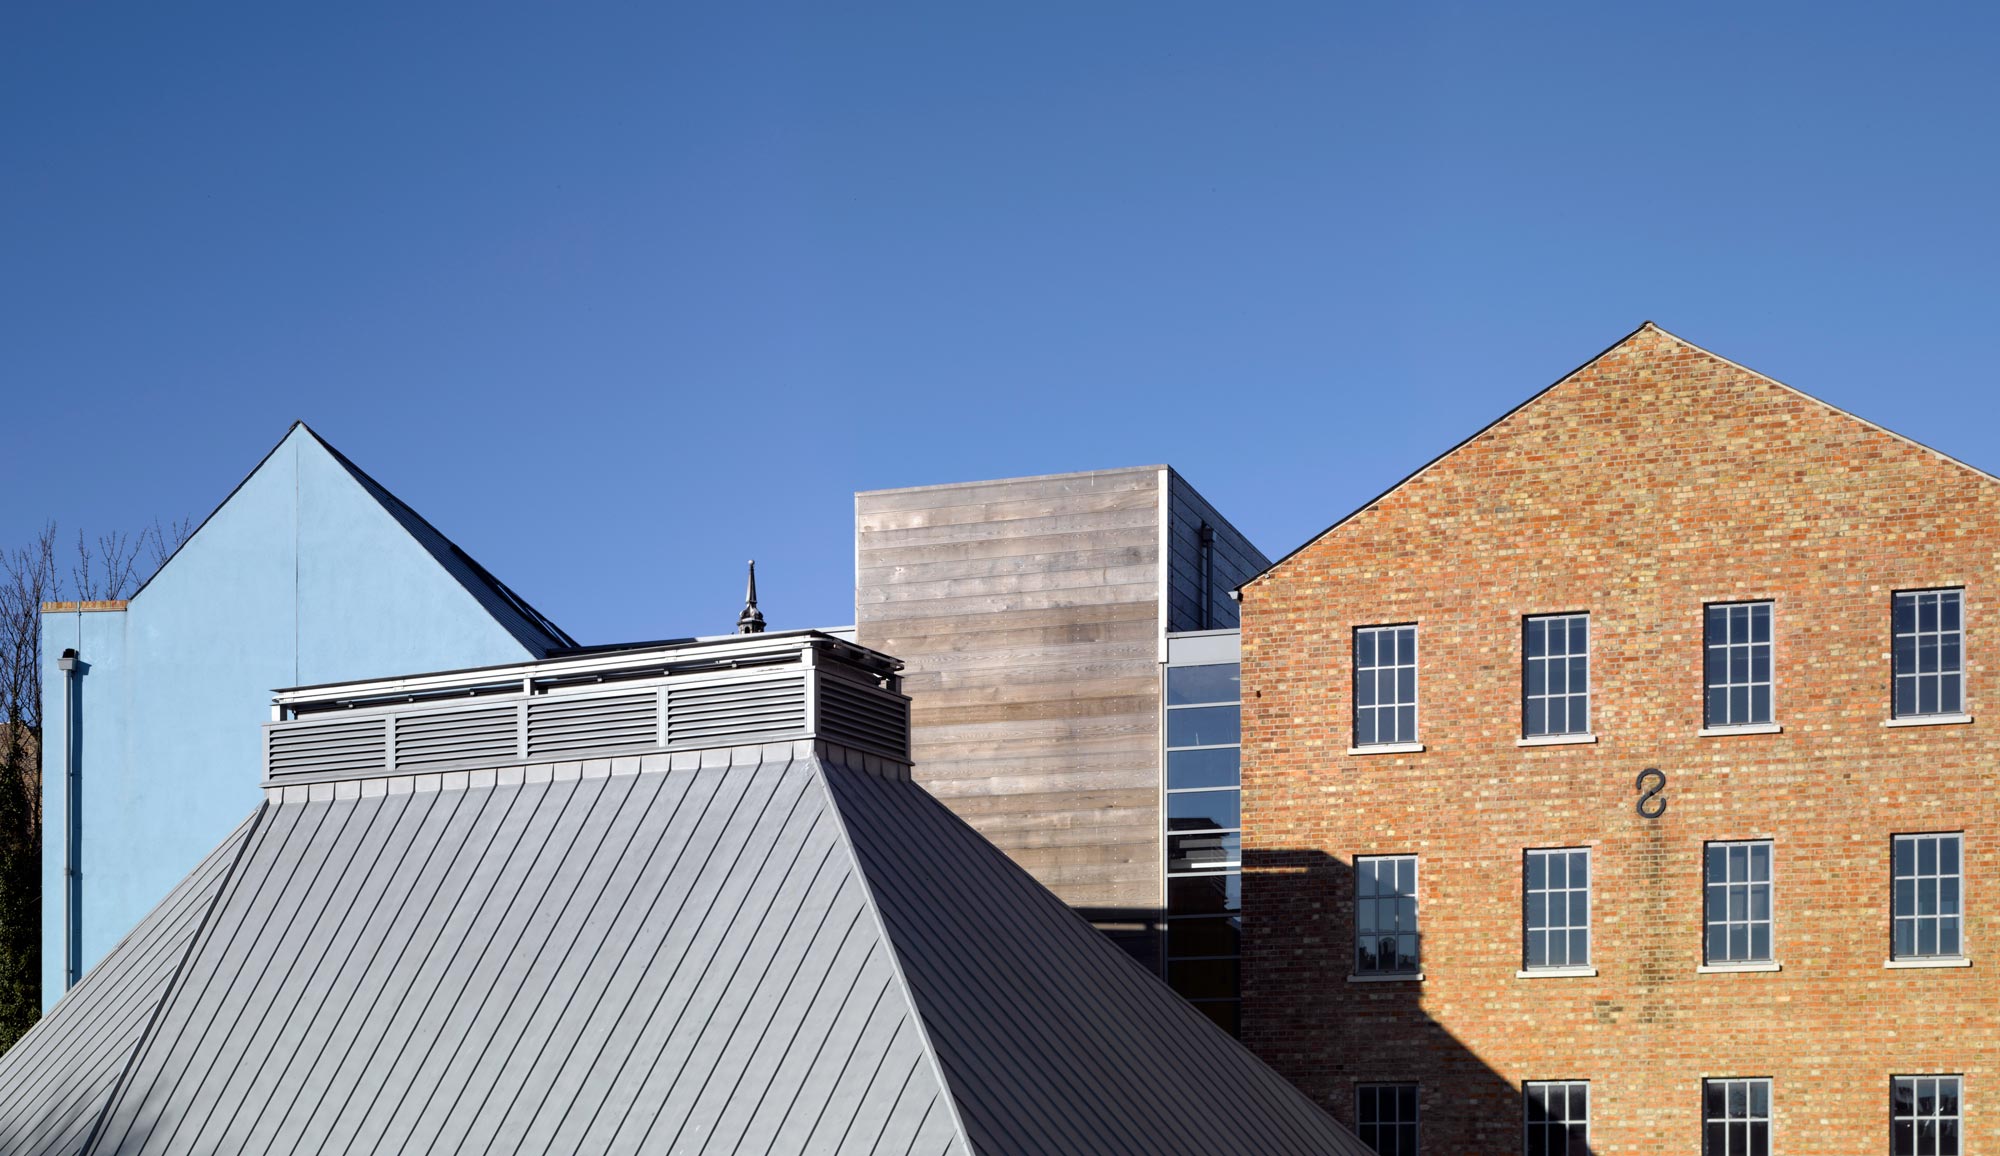 University Centre, Folkestone - Exterior View